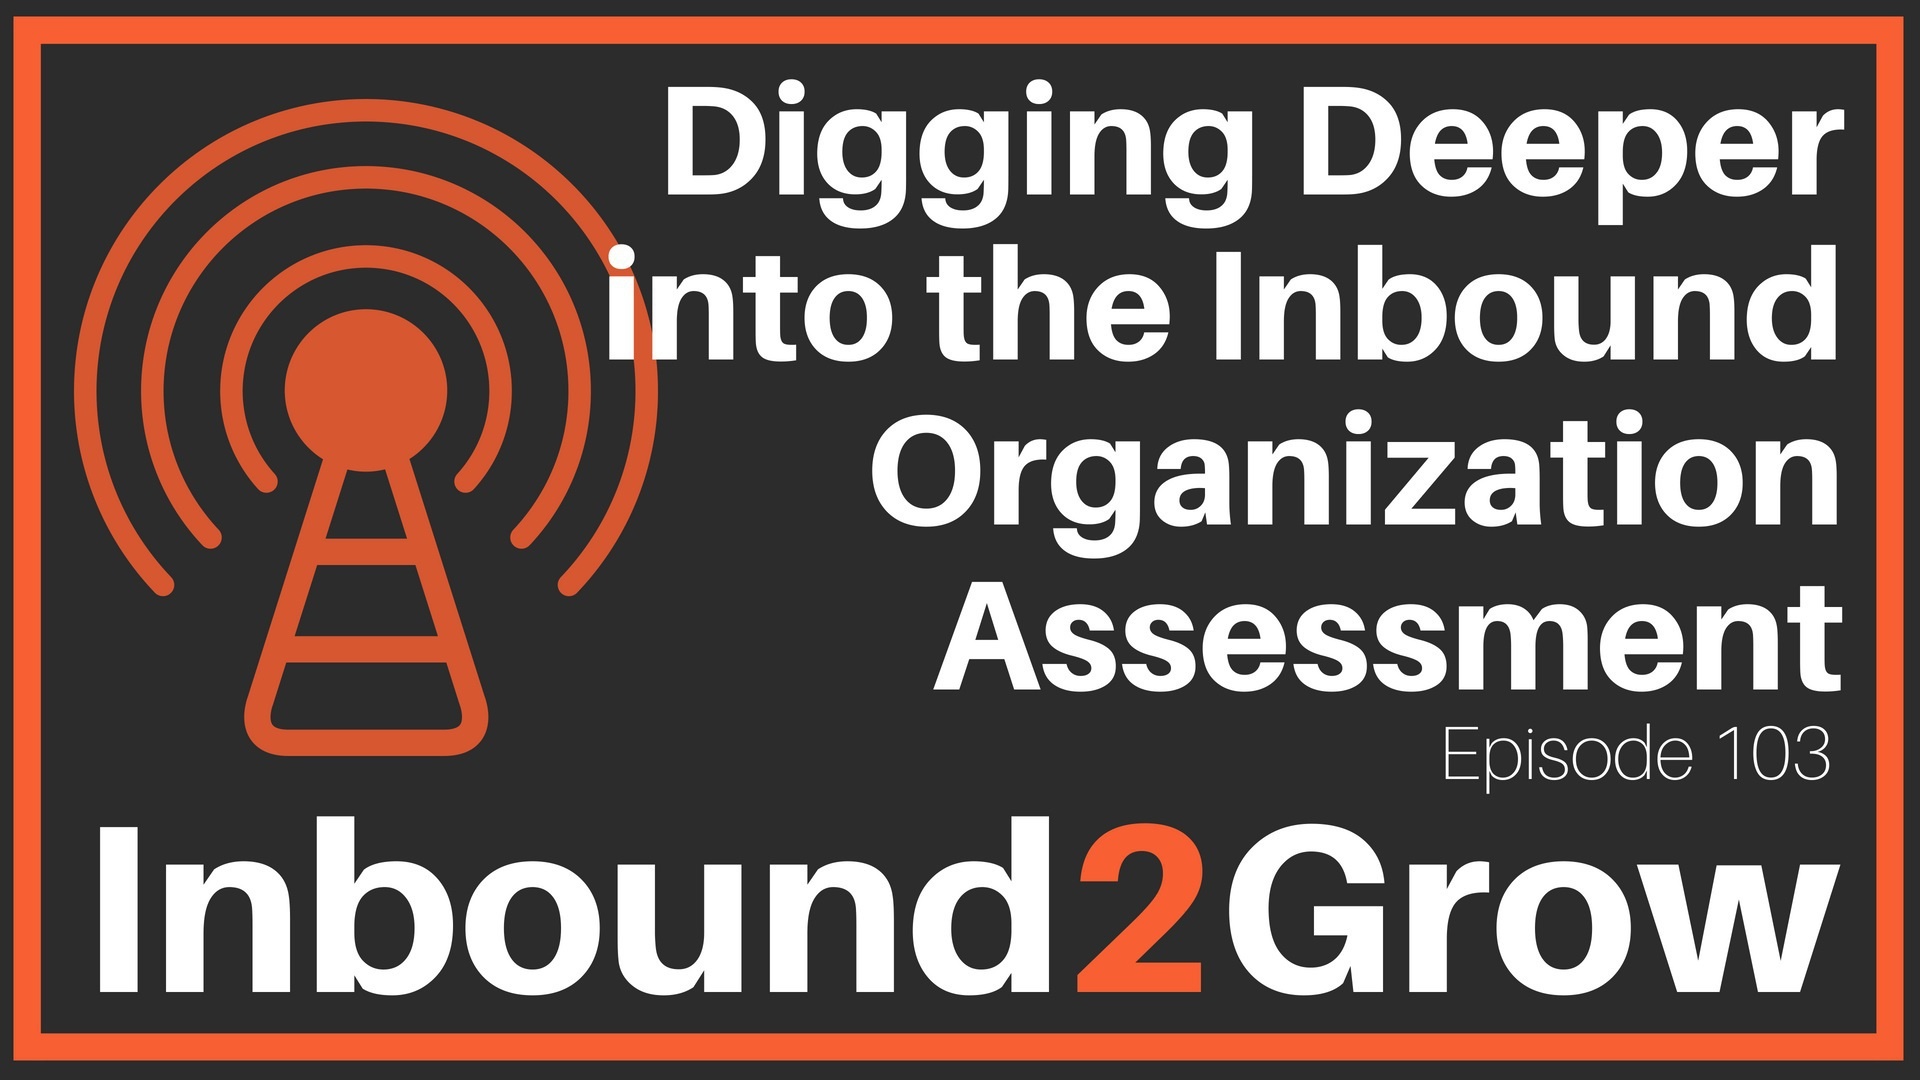 Episode 103: Digging Deeper into the Inbound Organization Assessment